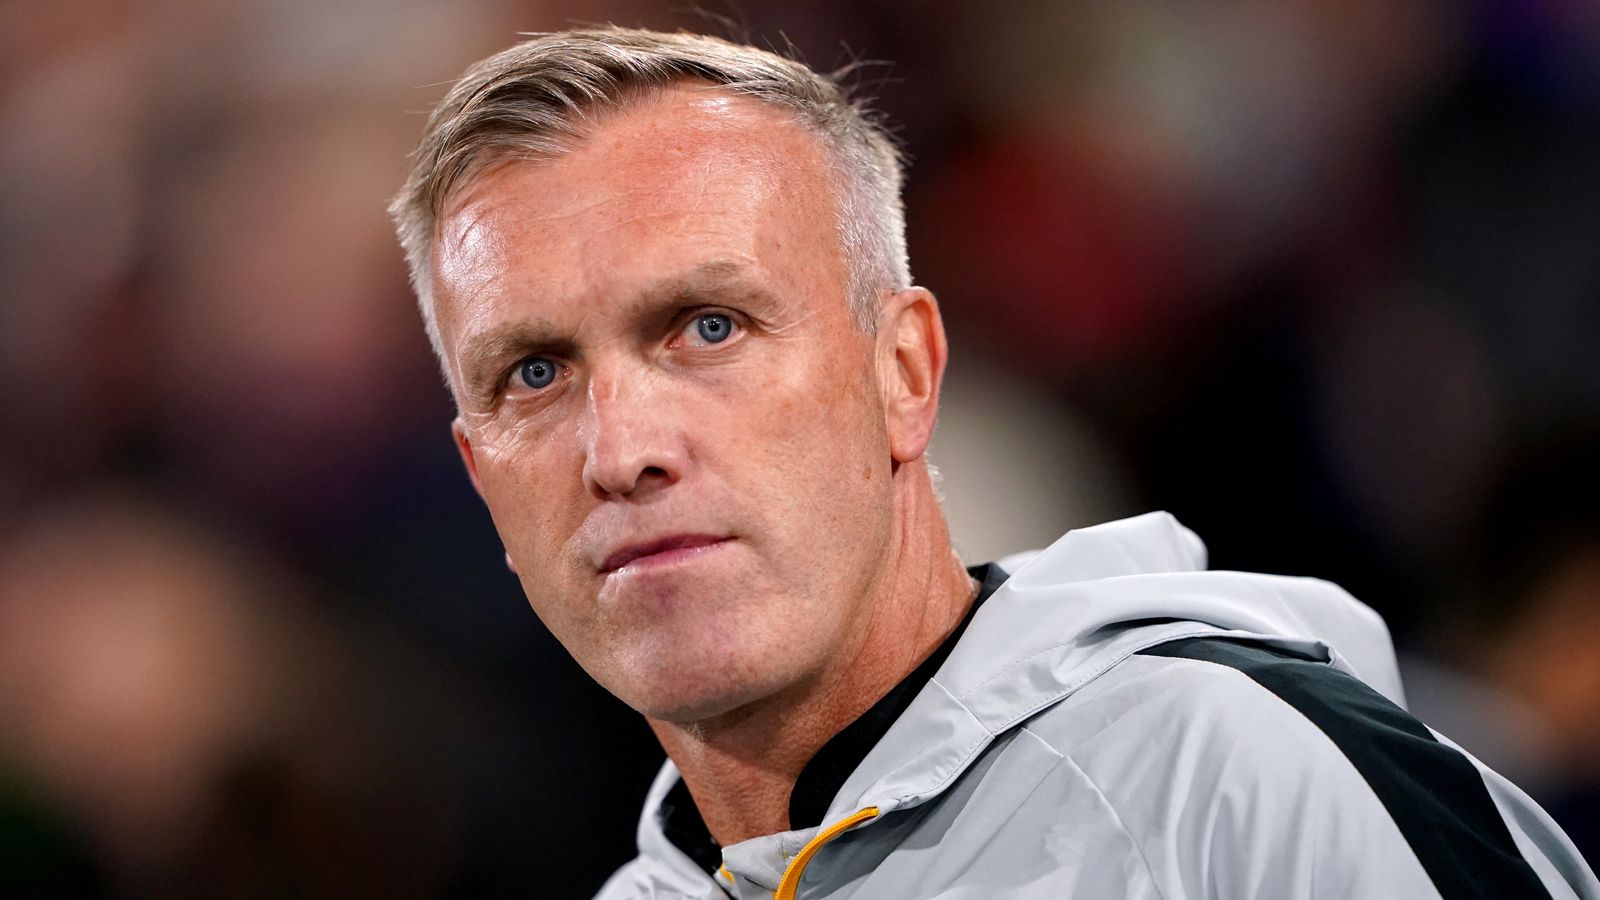 Wolves confirm Steve Davis to remain as interim head coach until 2023